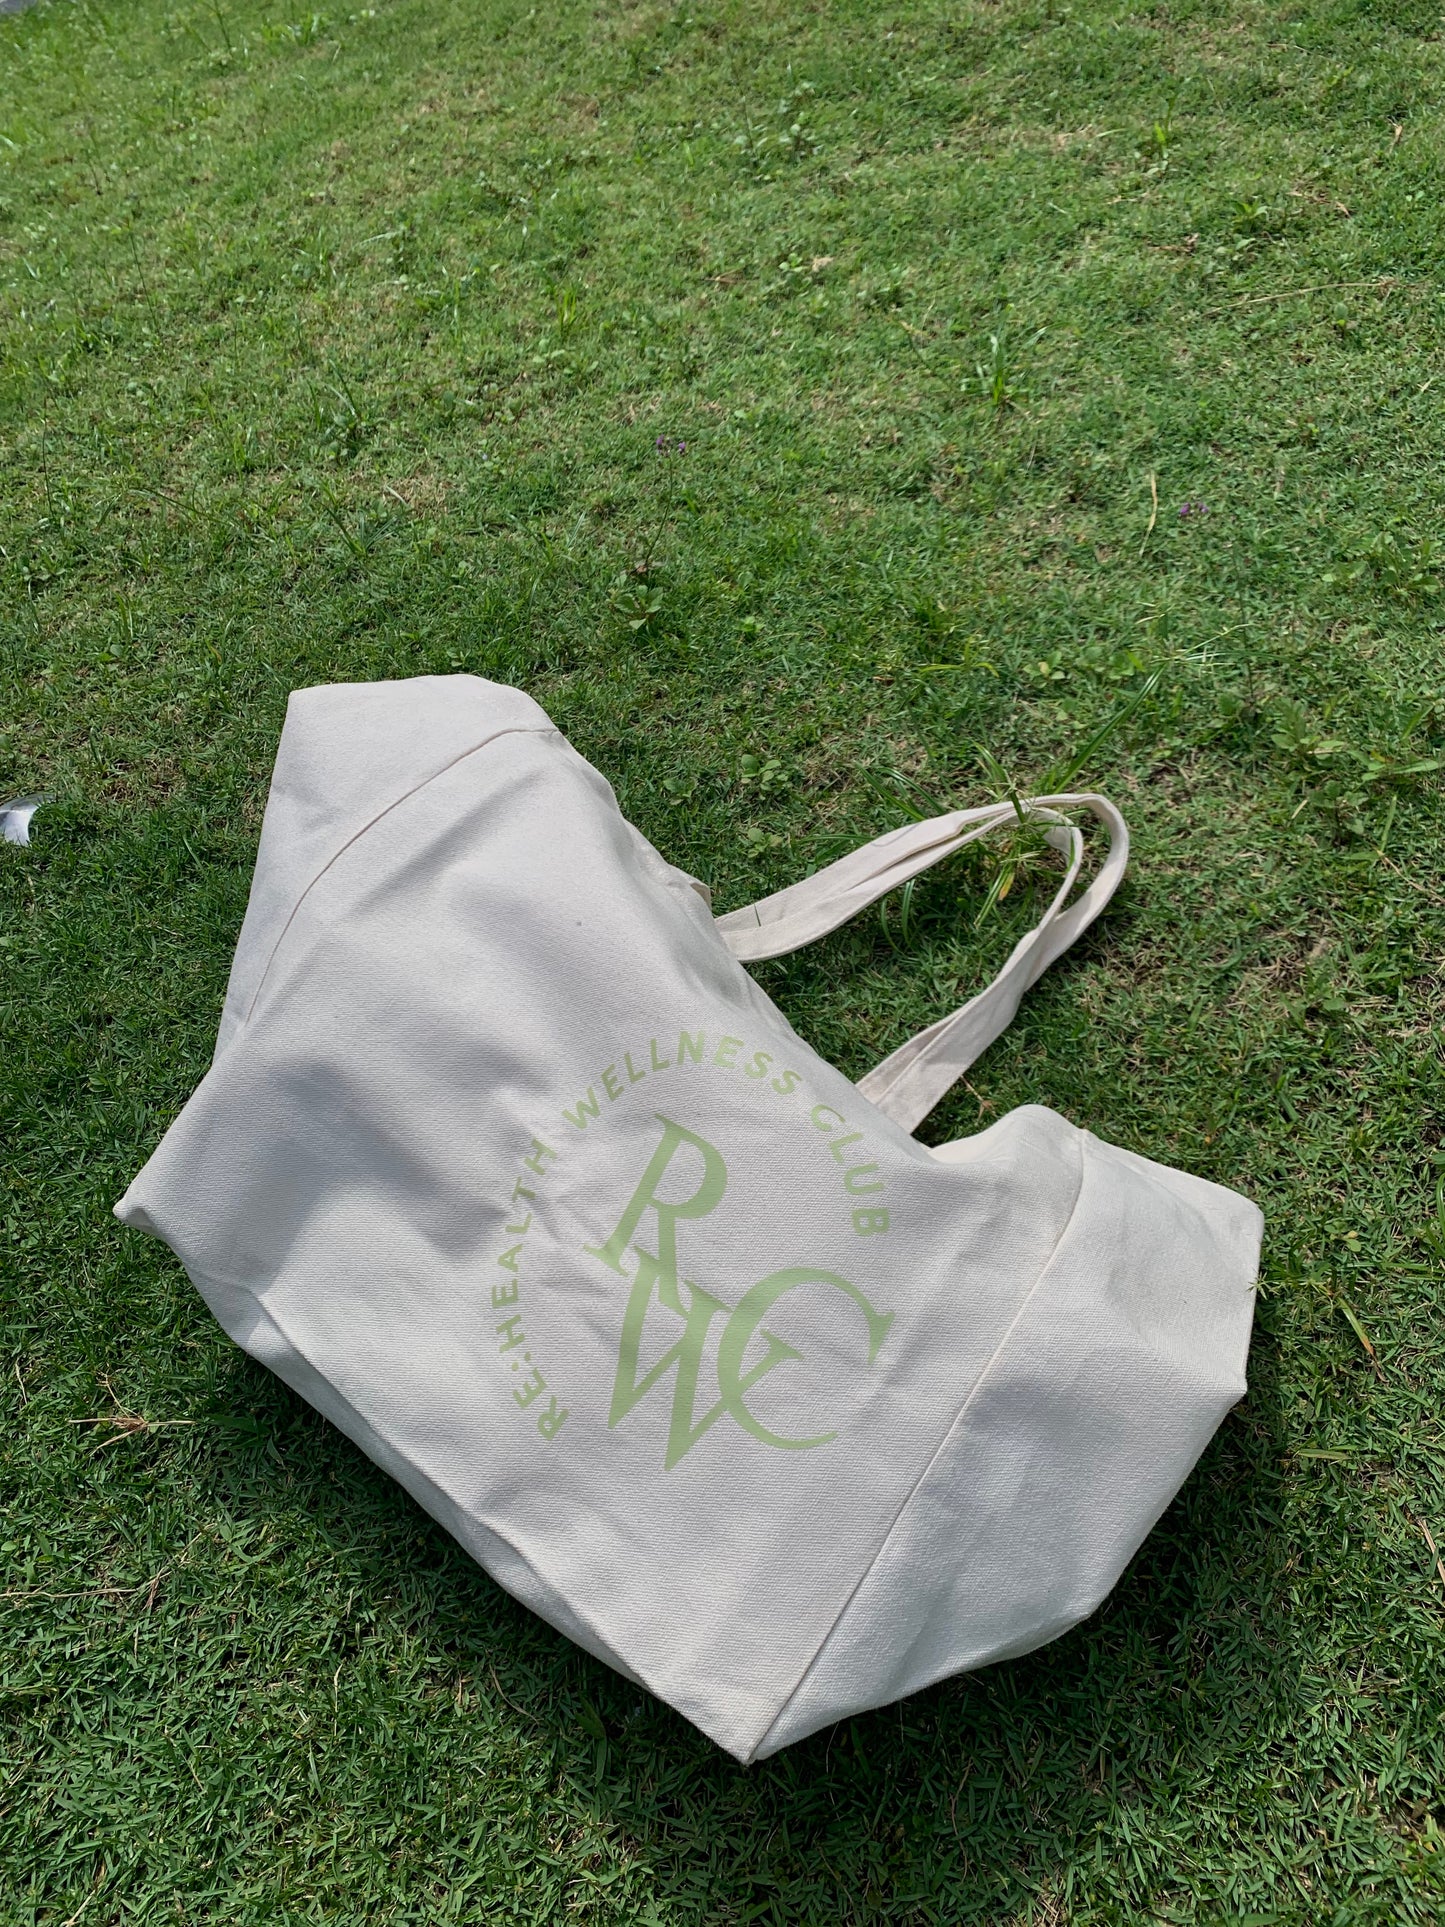 RE:HEALTH wellness club tote bag